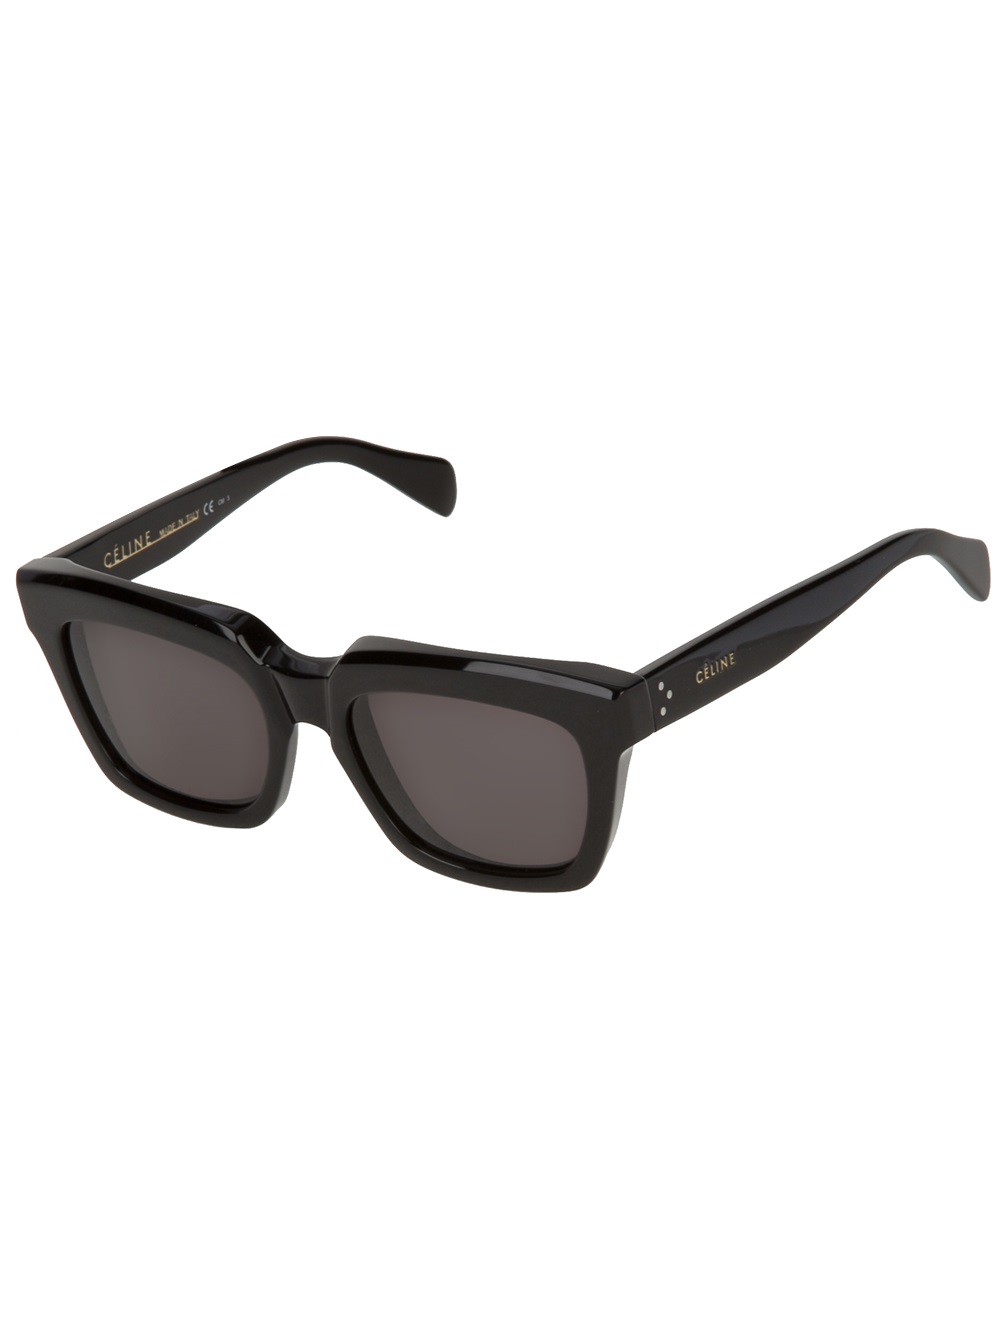 Celine Square Sunglasses in Black | Lyst